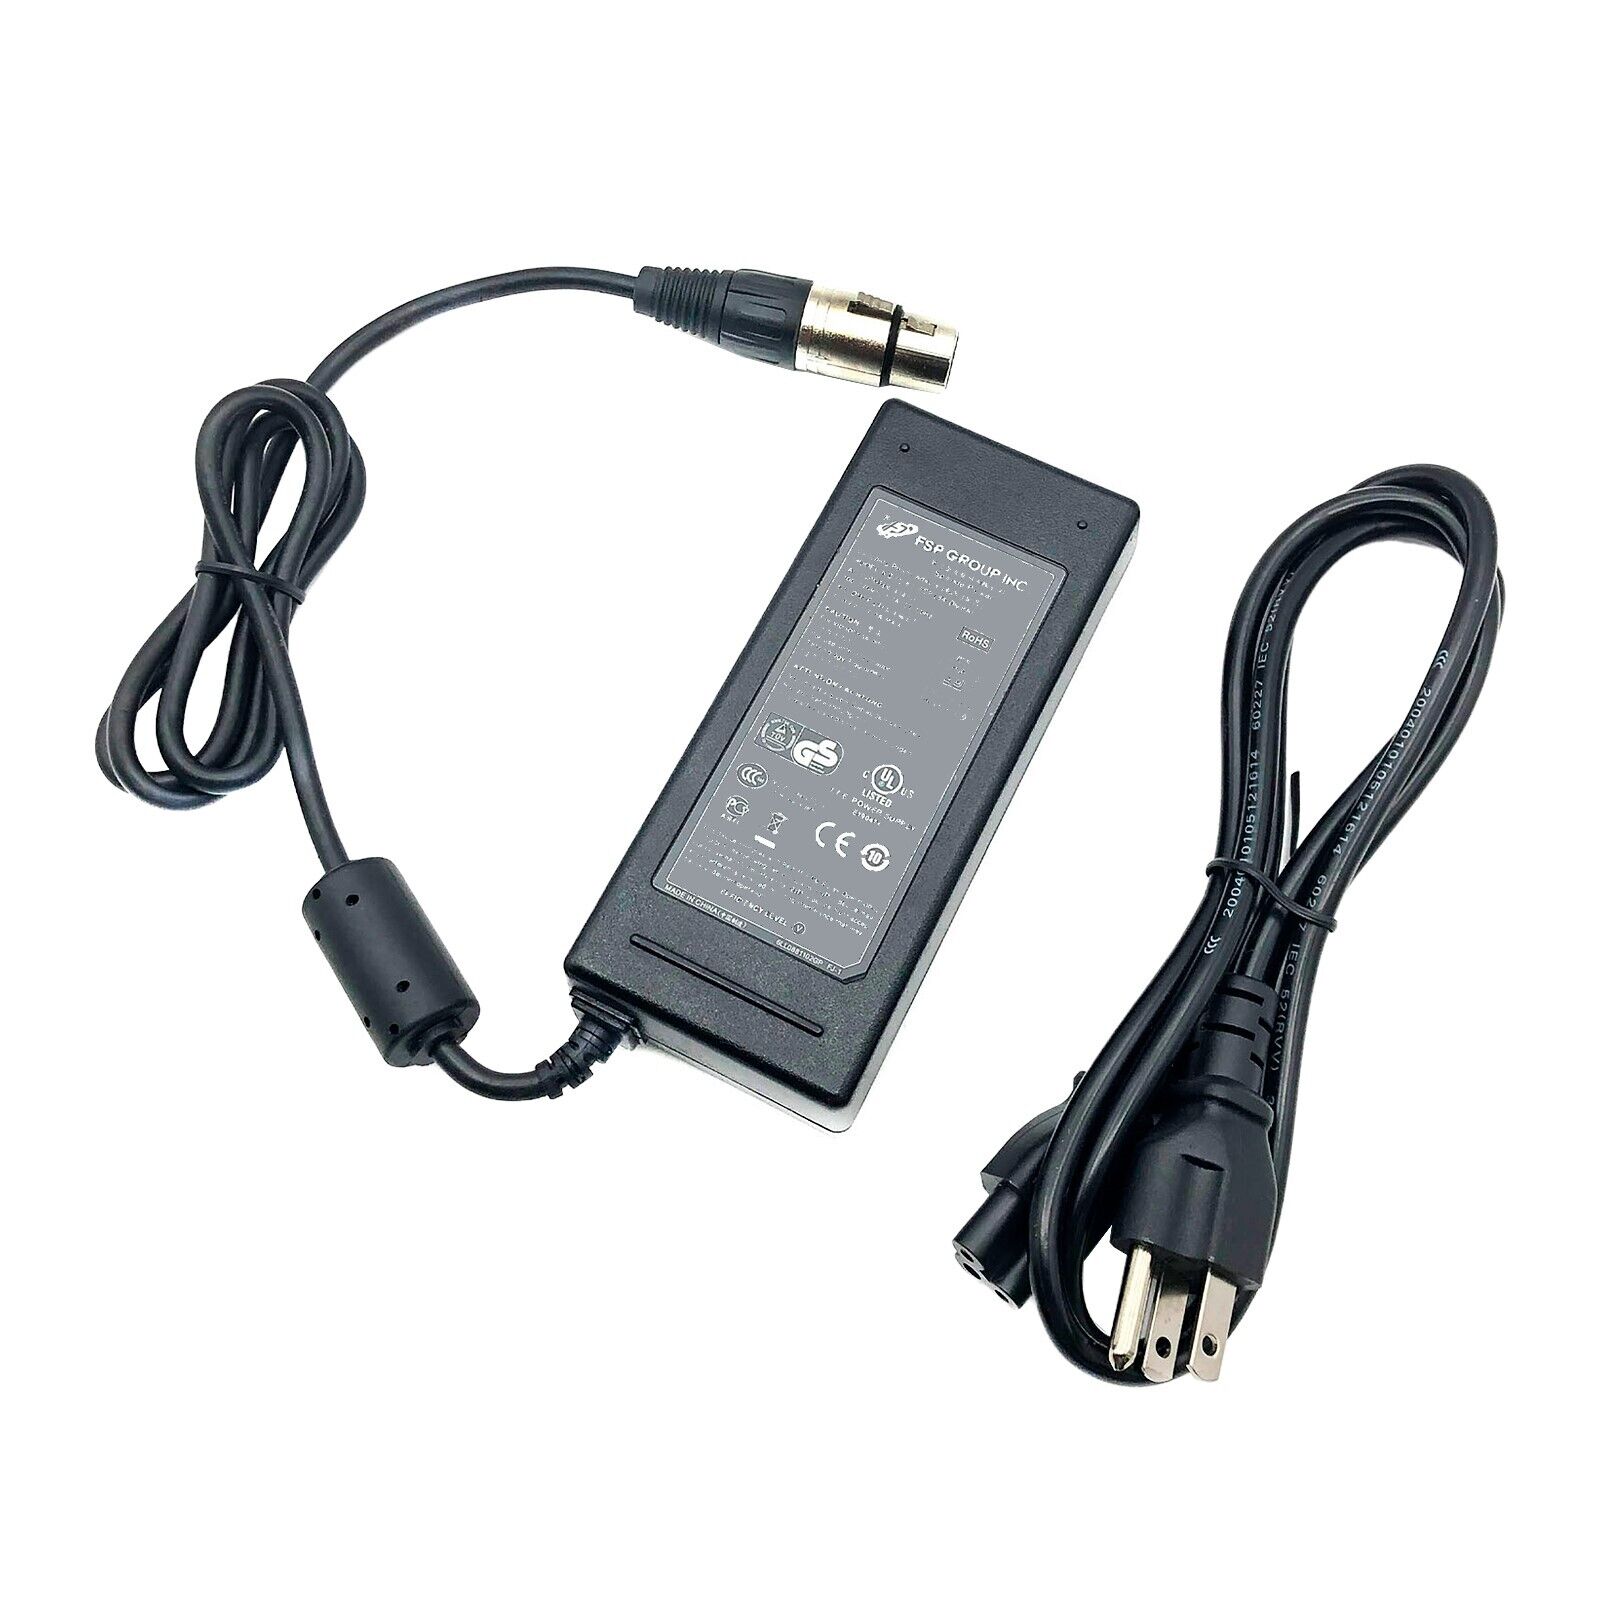 12v 4-pin Xlr Power Adapter For Panasonic Hpx 370 Ag B640 Aw Ps550n Wv-555b Cord